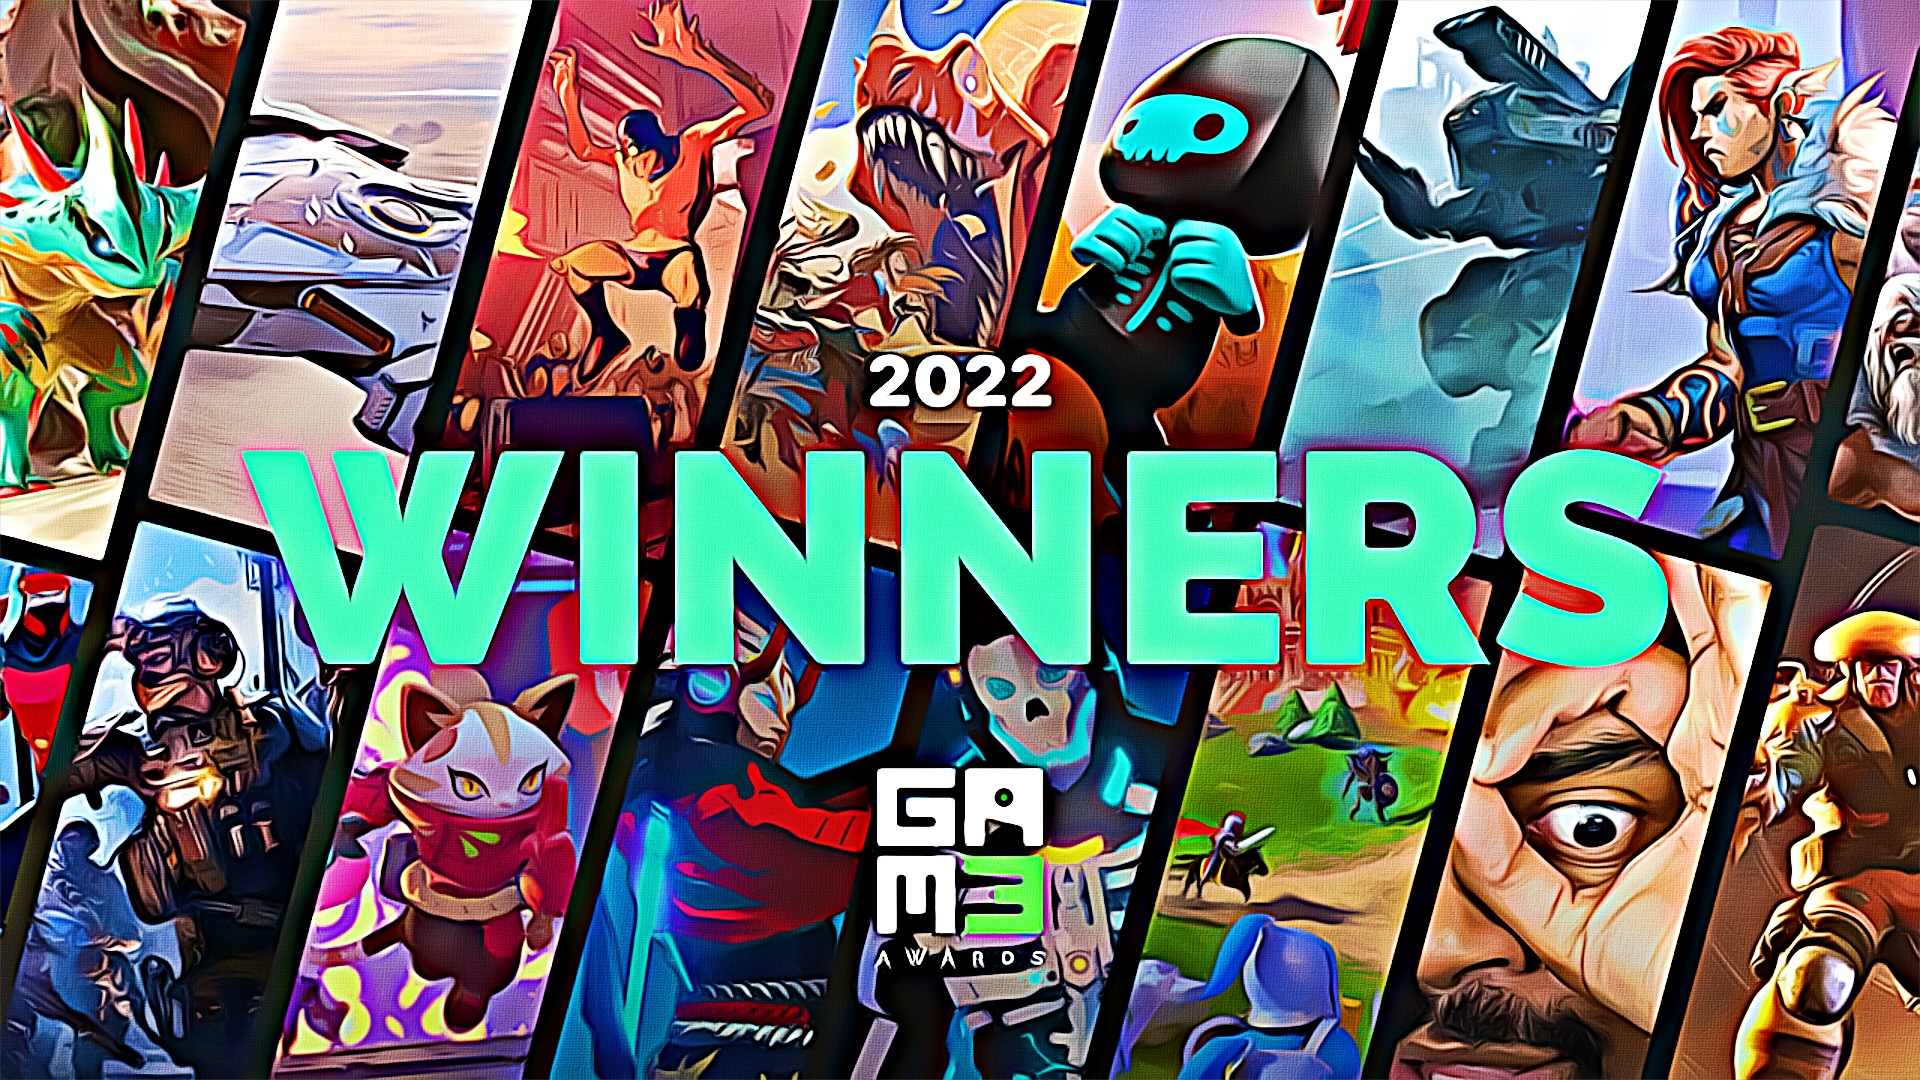 Best Content Creator 2022 - PlayToEarn Blockchain Game Awards 2022